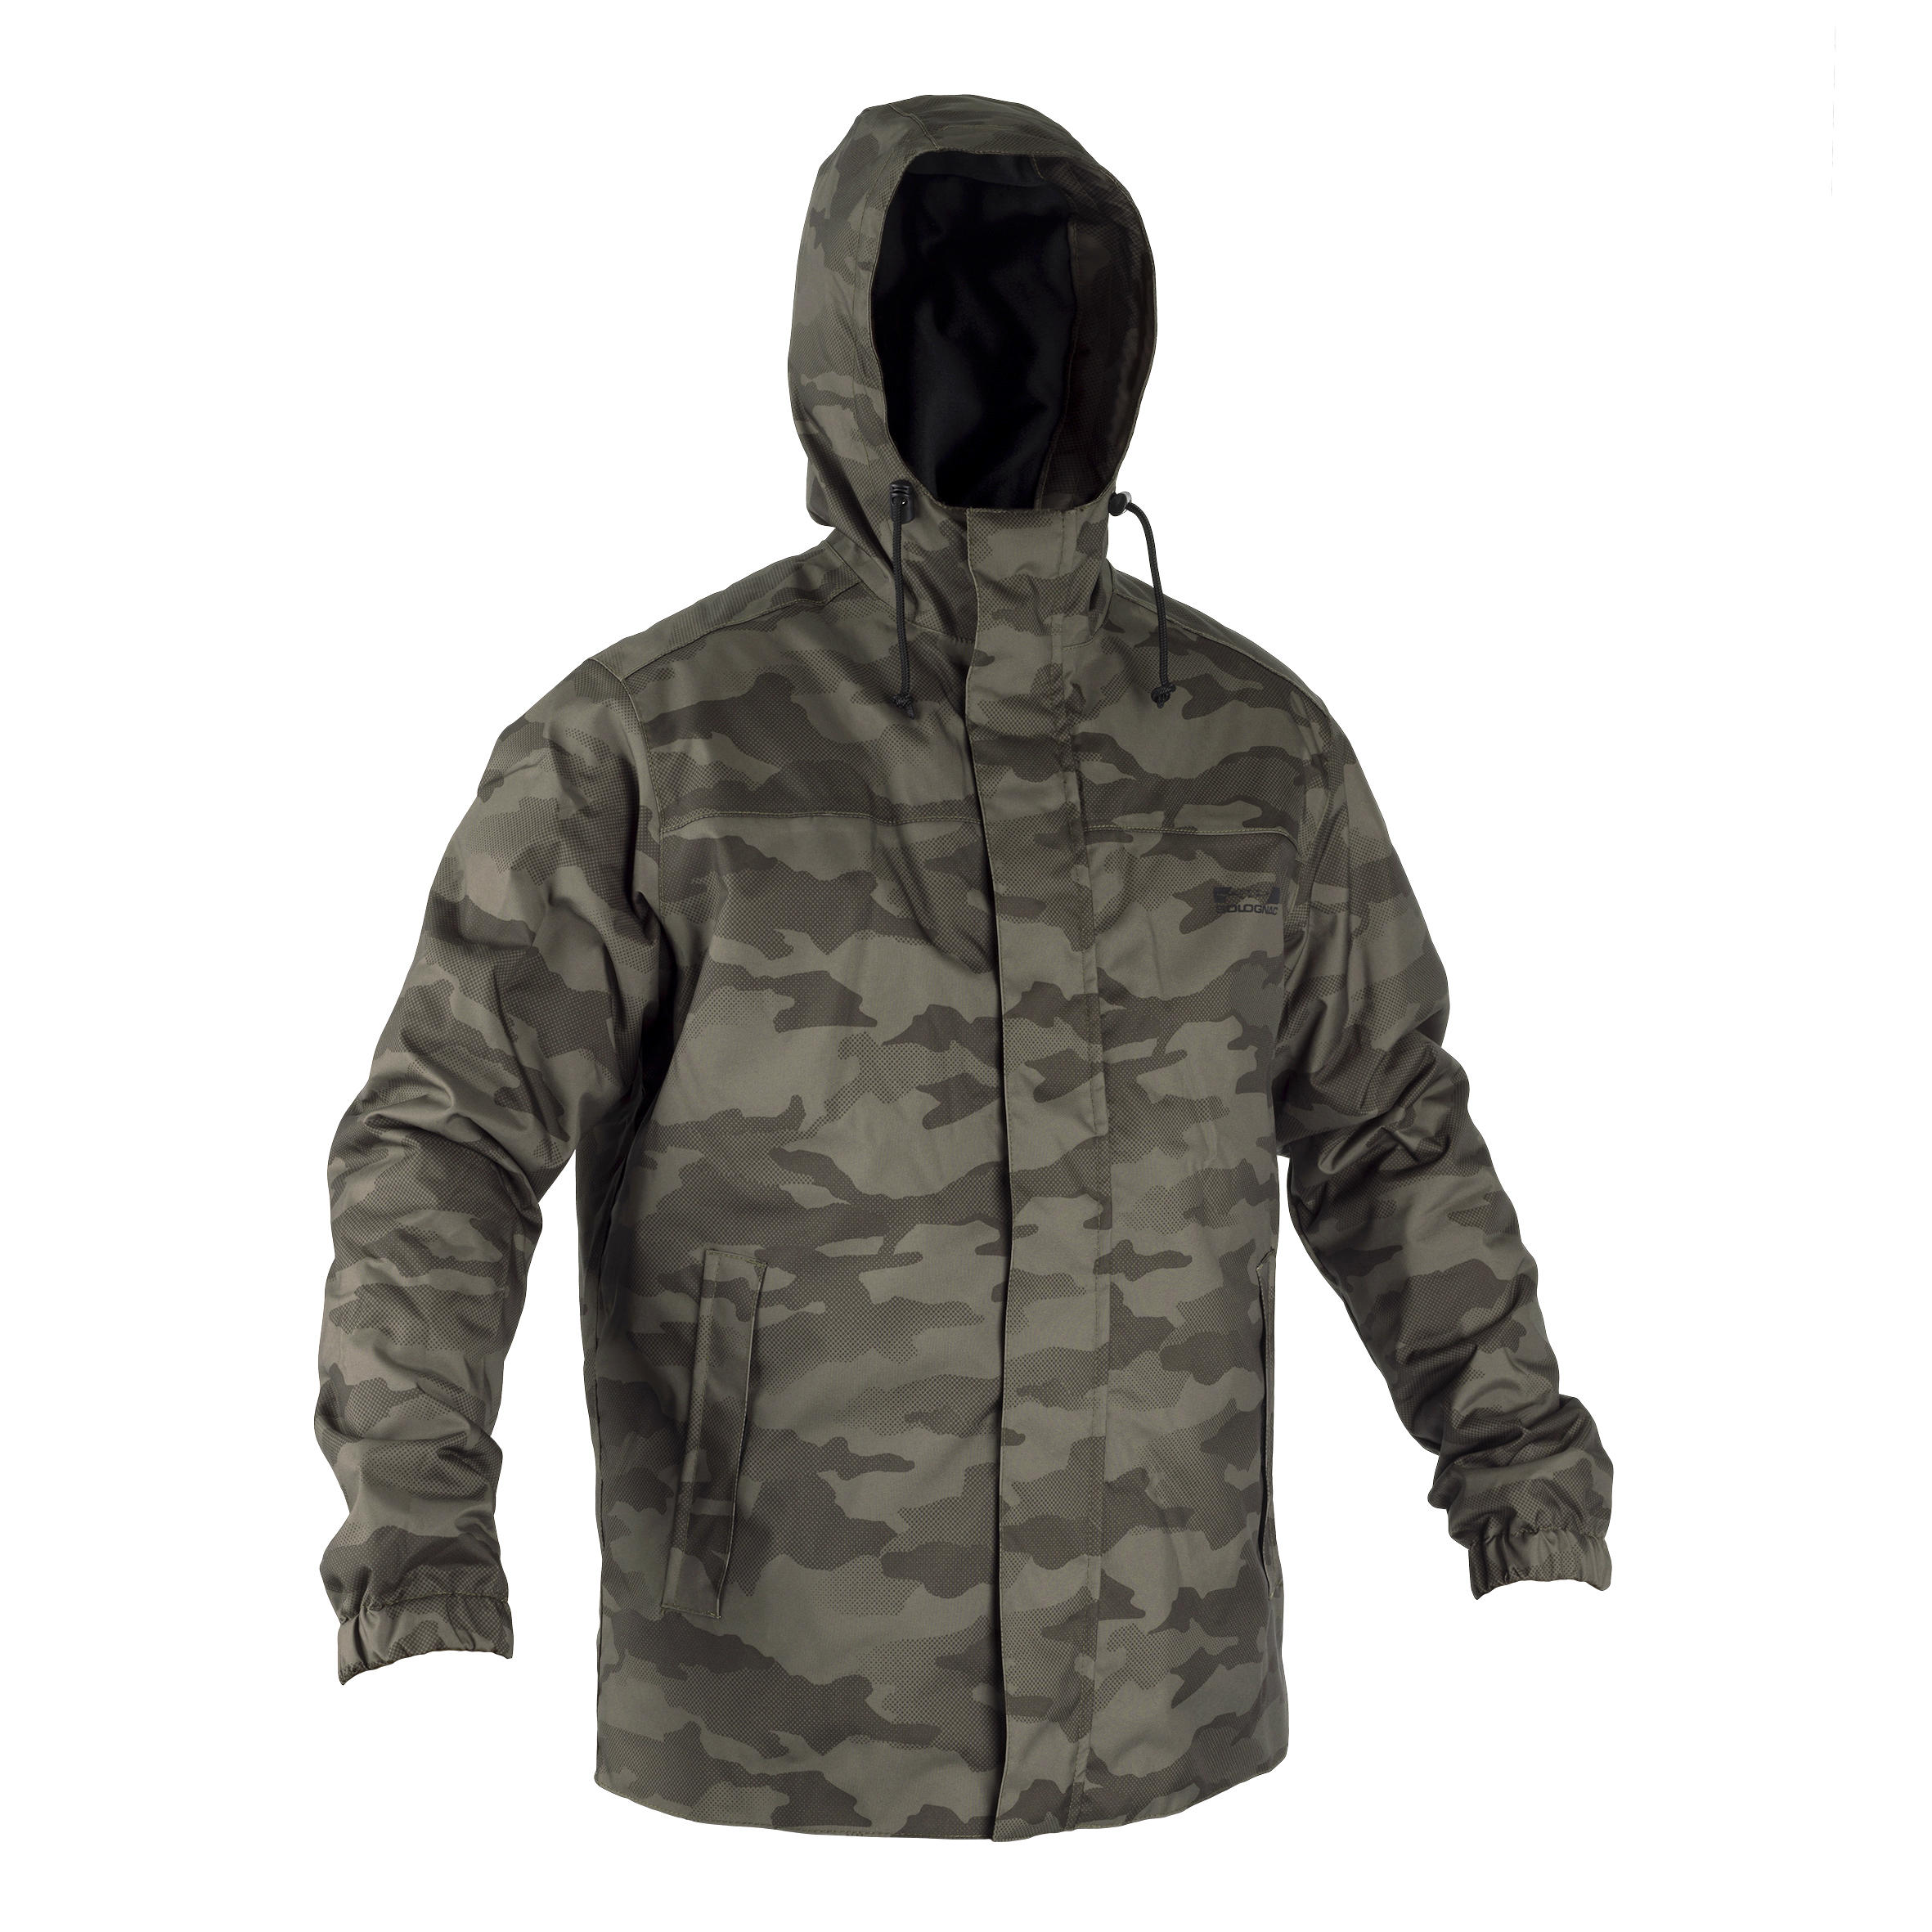 decathlon army jacket